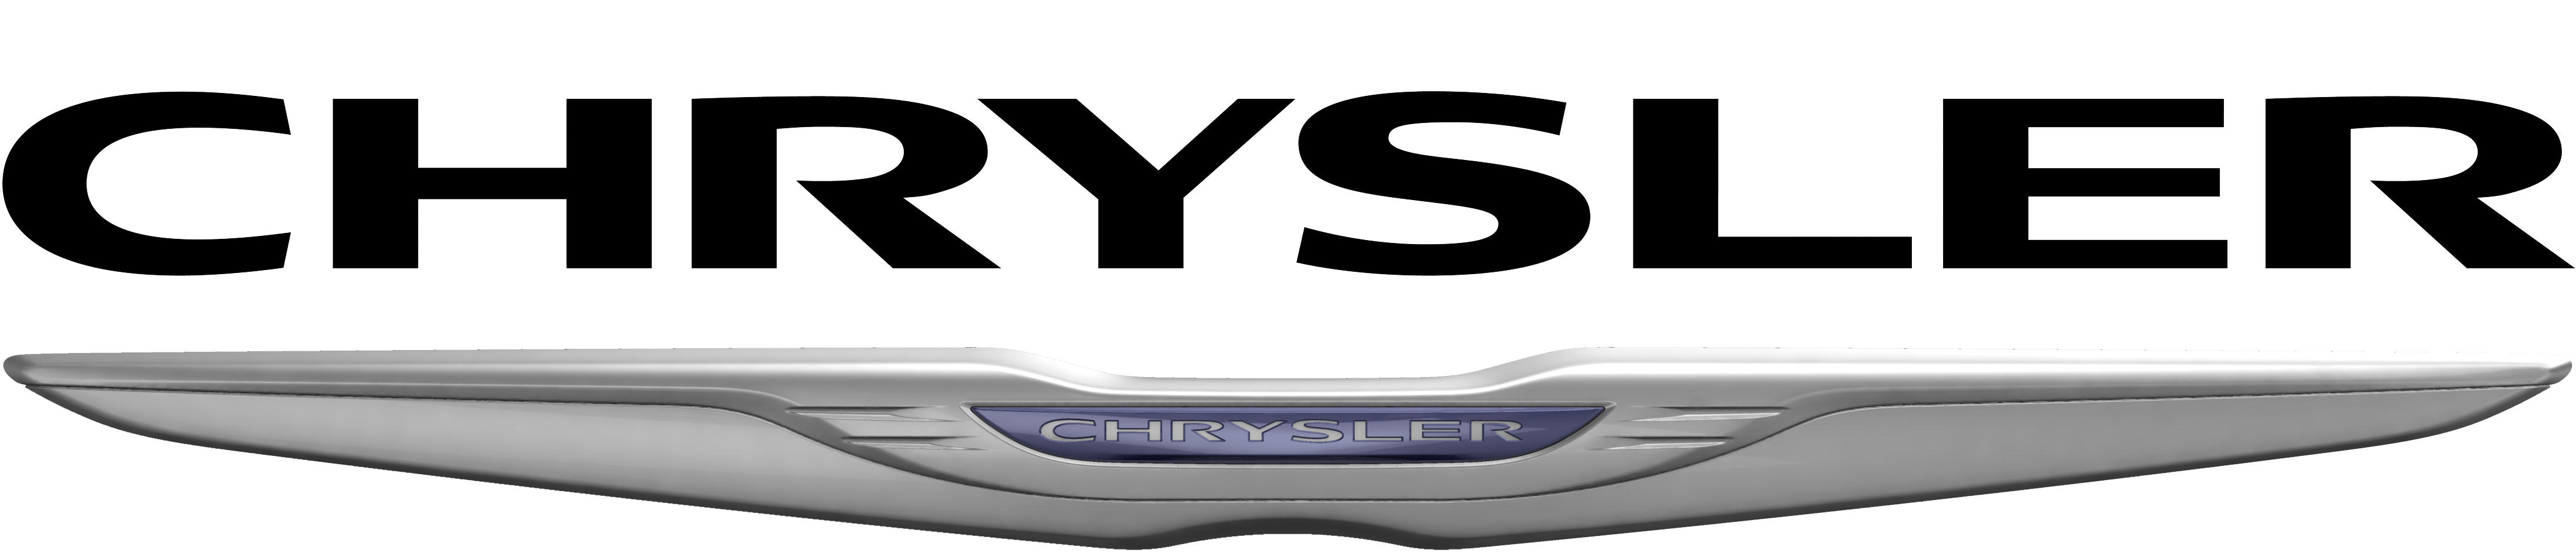 6 Chrysler Logo Vector Images